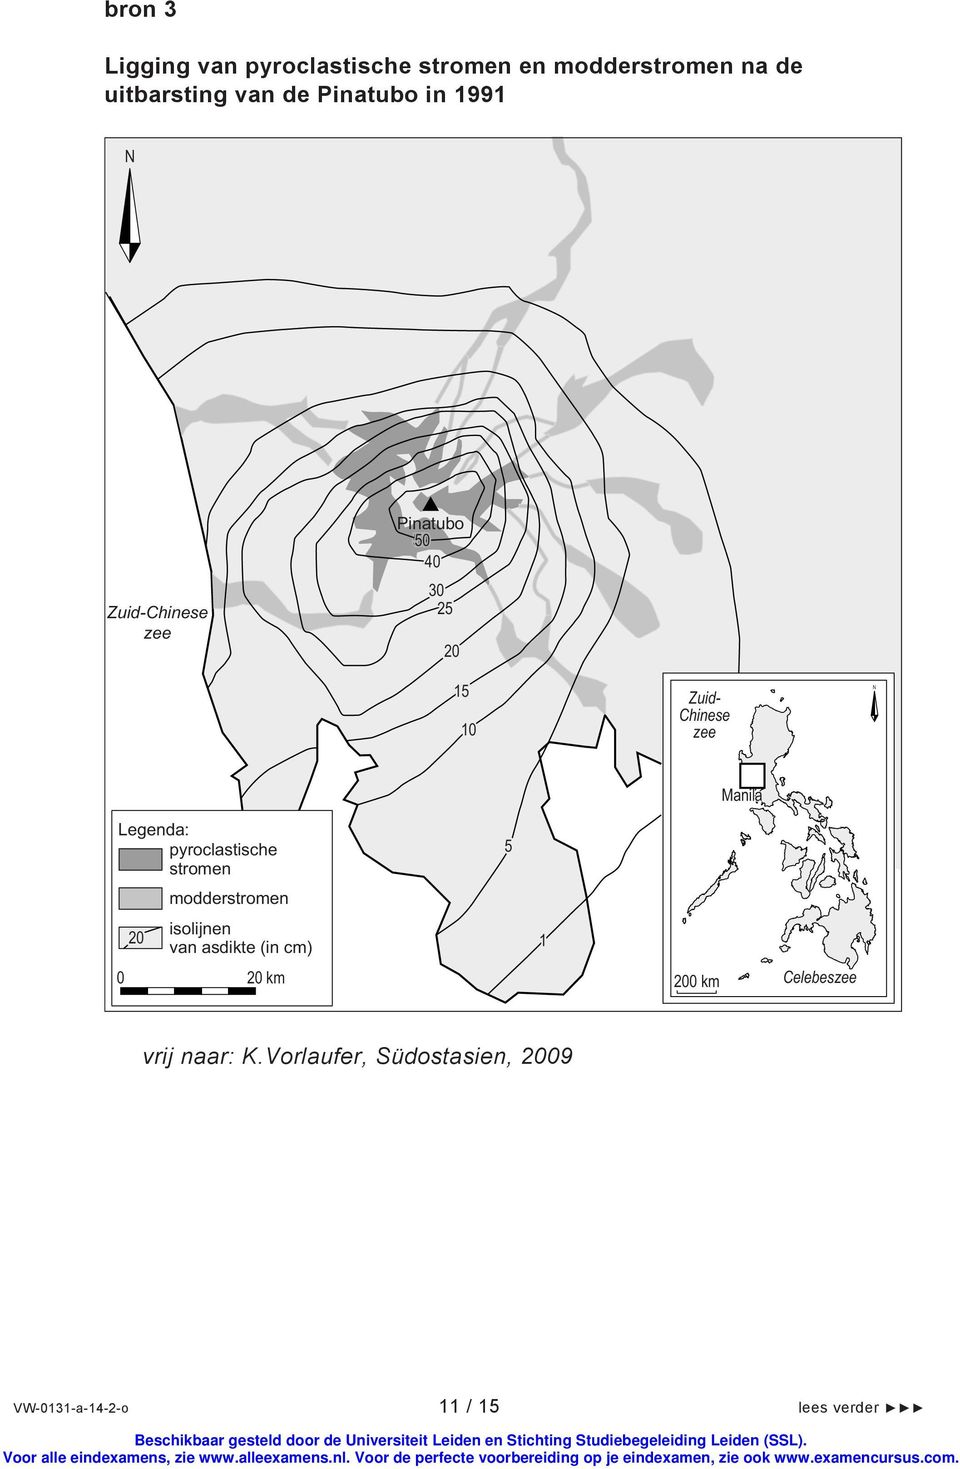 Manila Legenda: pyroclastische stromen modderstromen isolijnen 20 van asdikte (in cm) 0 20